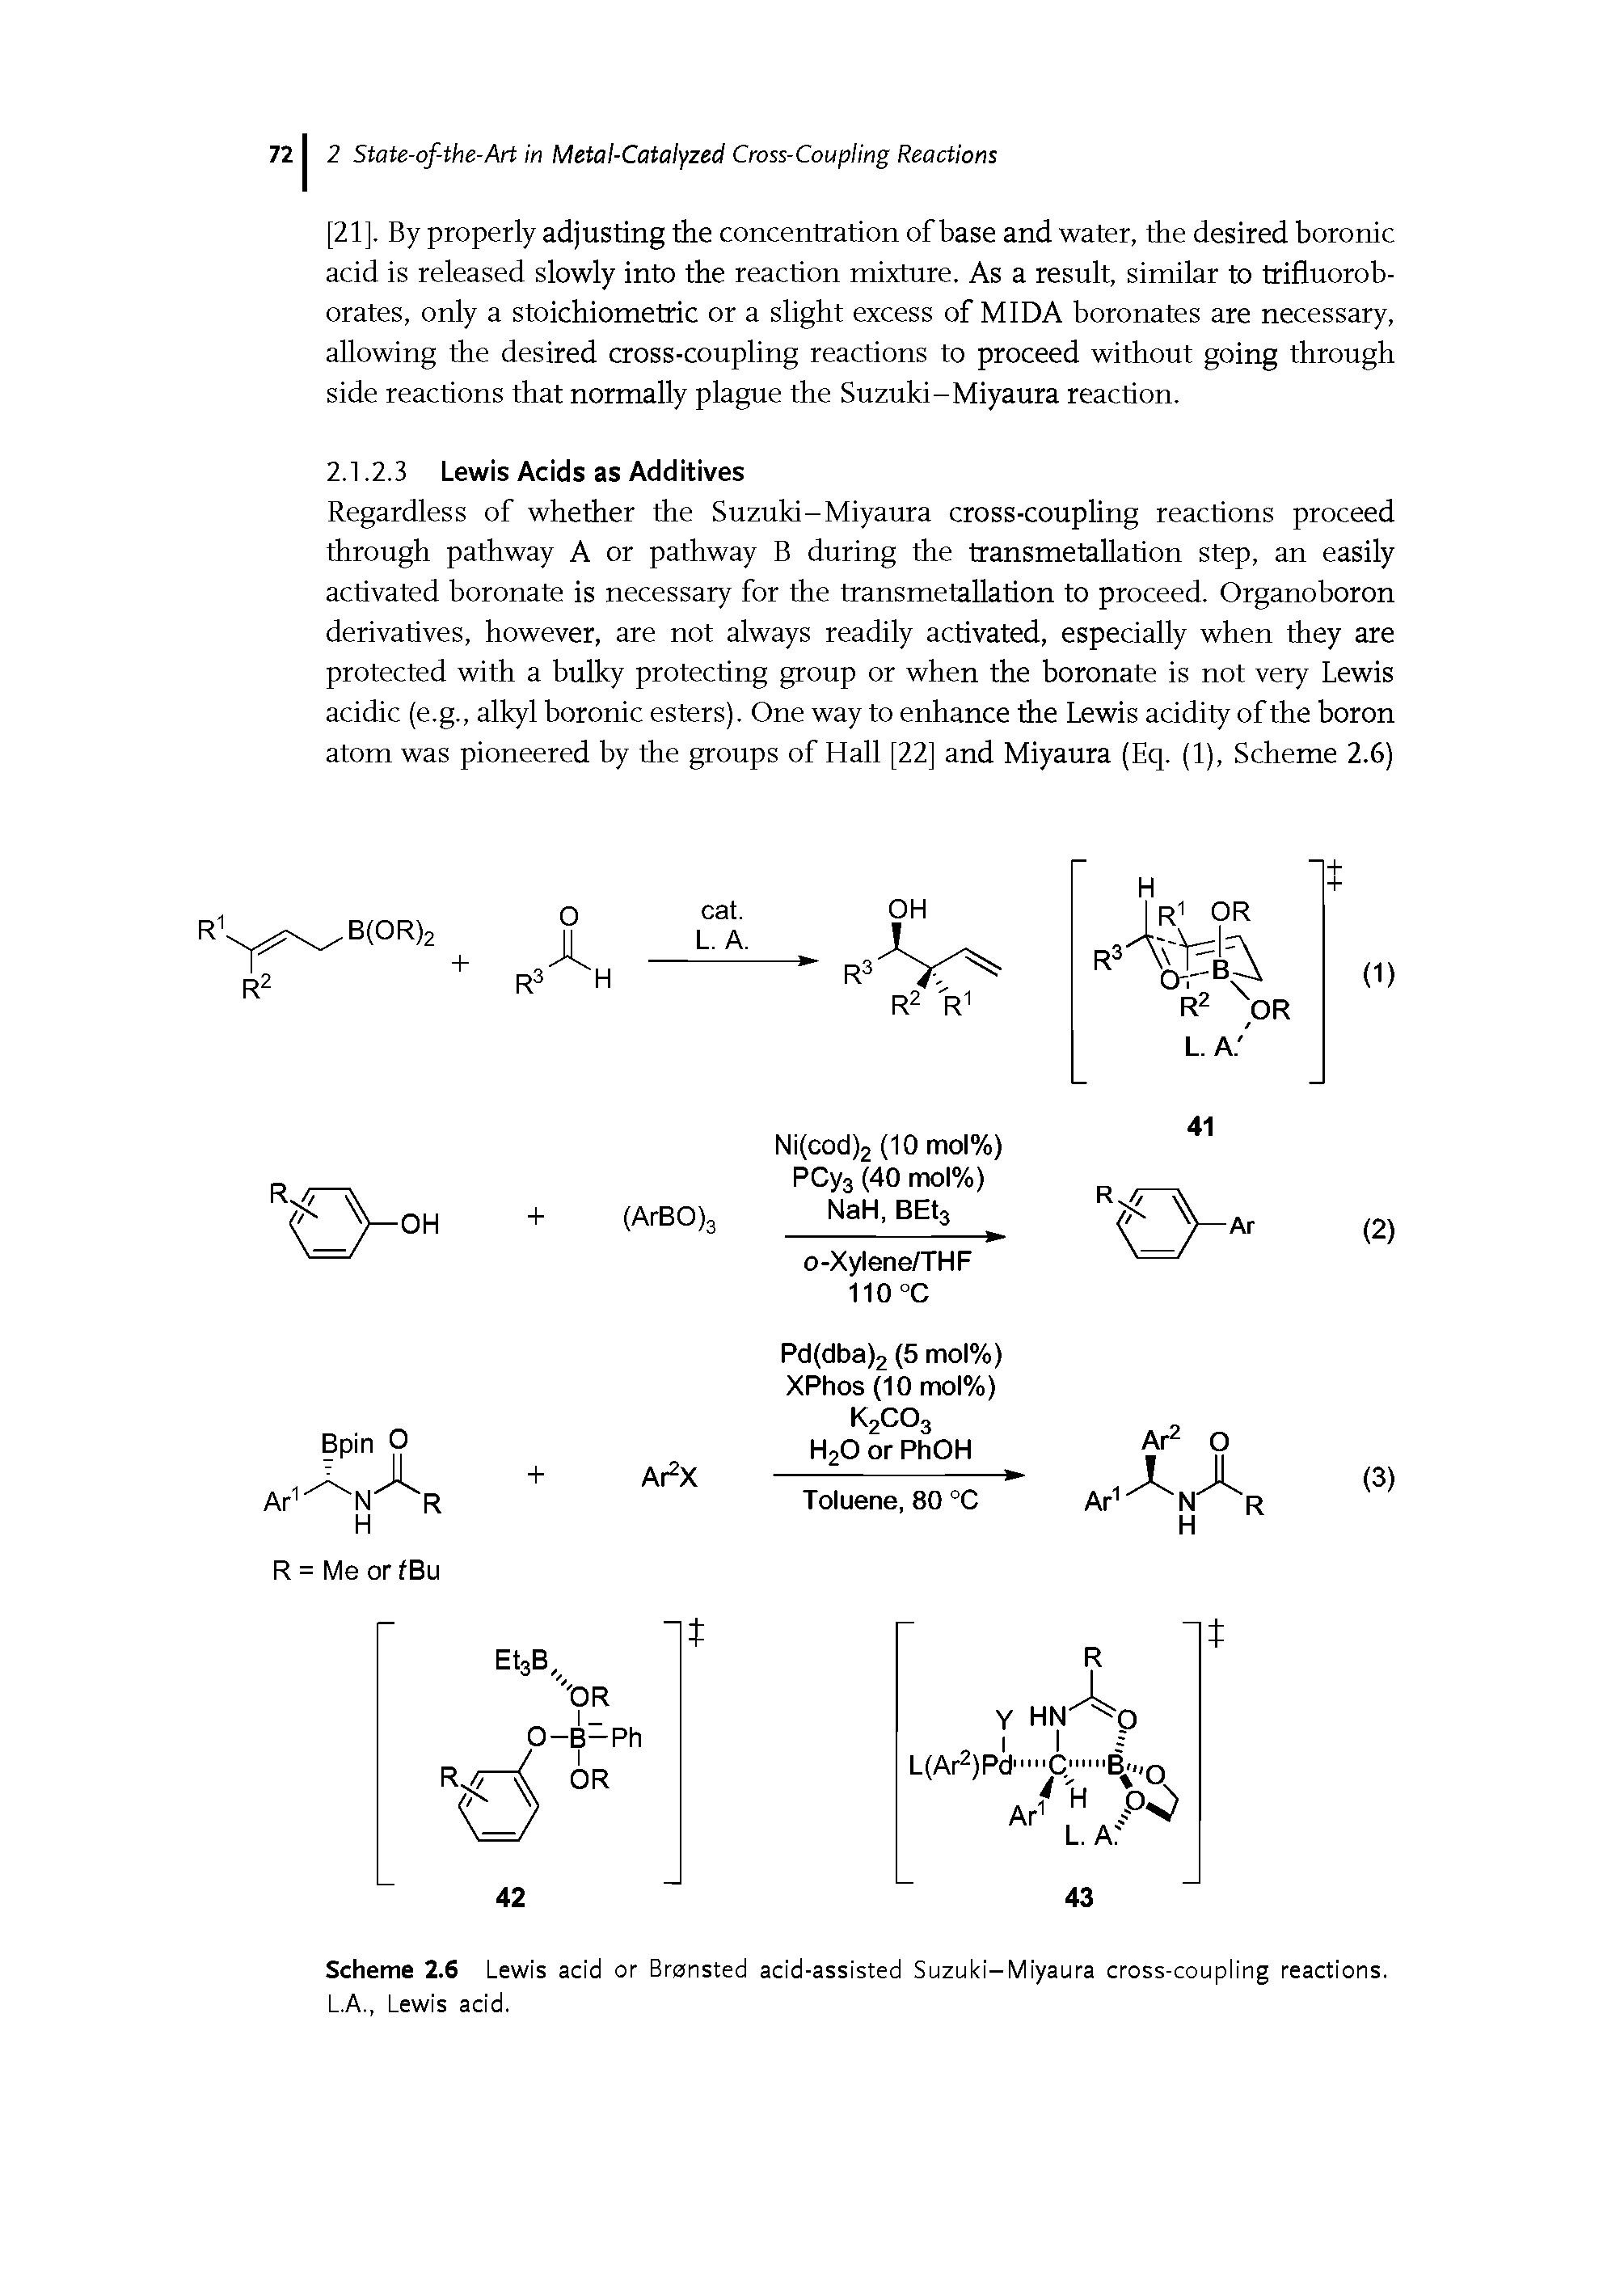 Scheme 2.6 Lewis acid or Bronsted acid-assisted Suzuki-Miyaura cross-coupling reactions. L.A., Lewis acid.